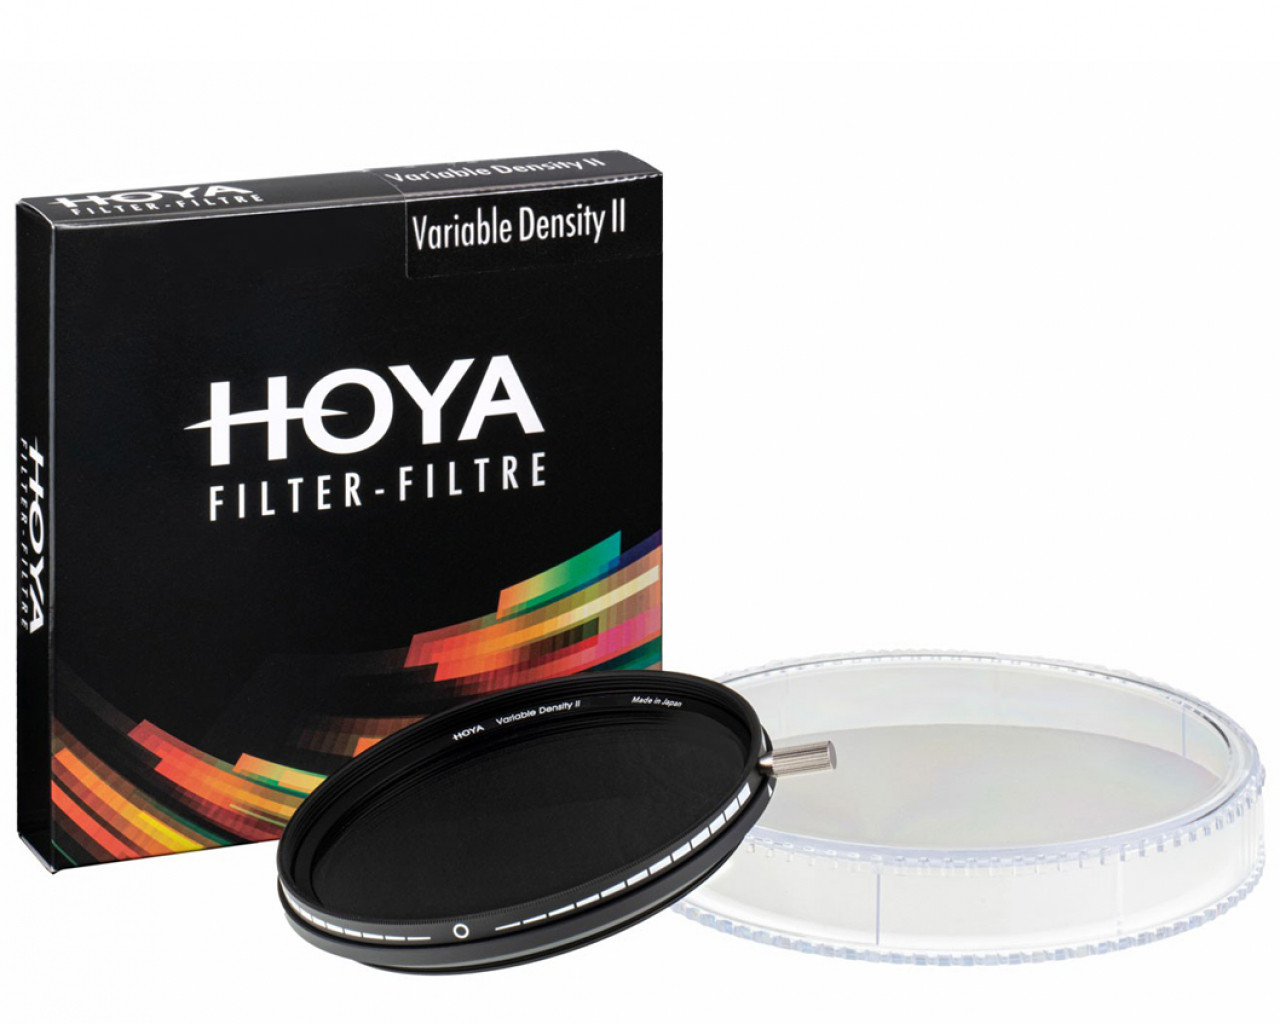 Hoya Filtro Vario-ND II 77mm